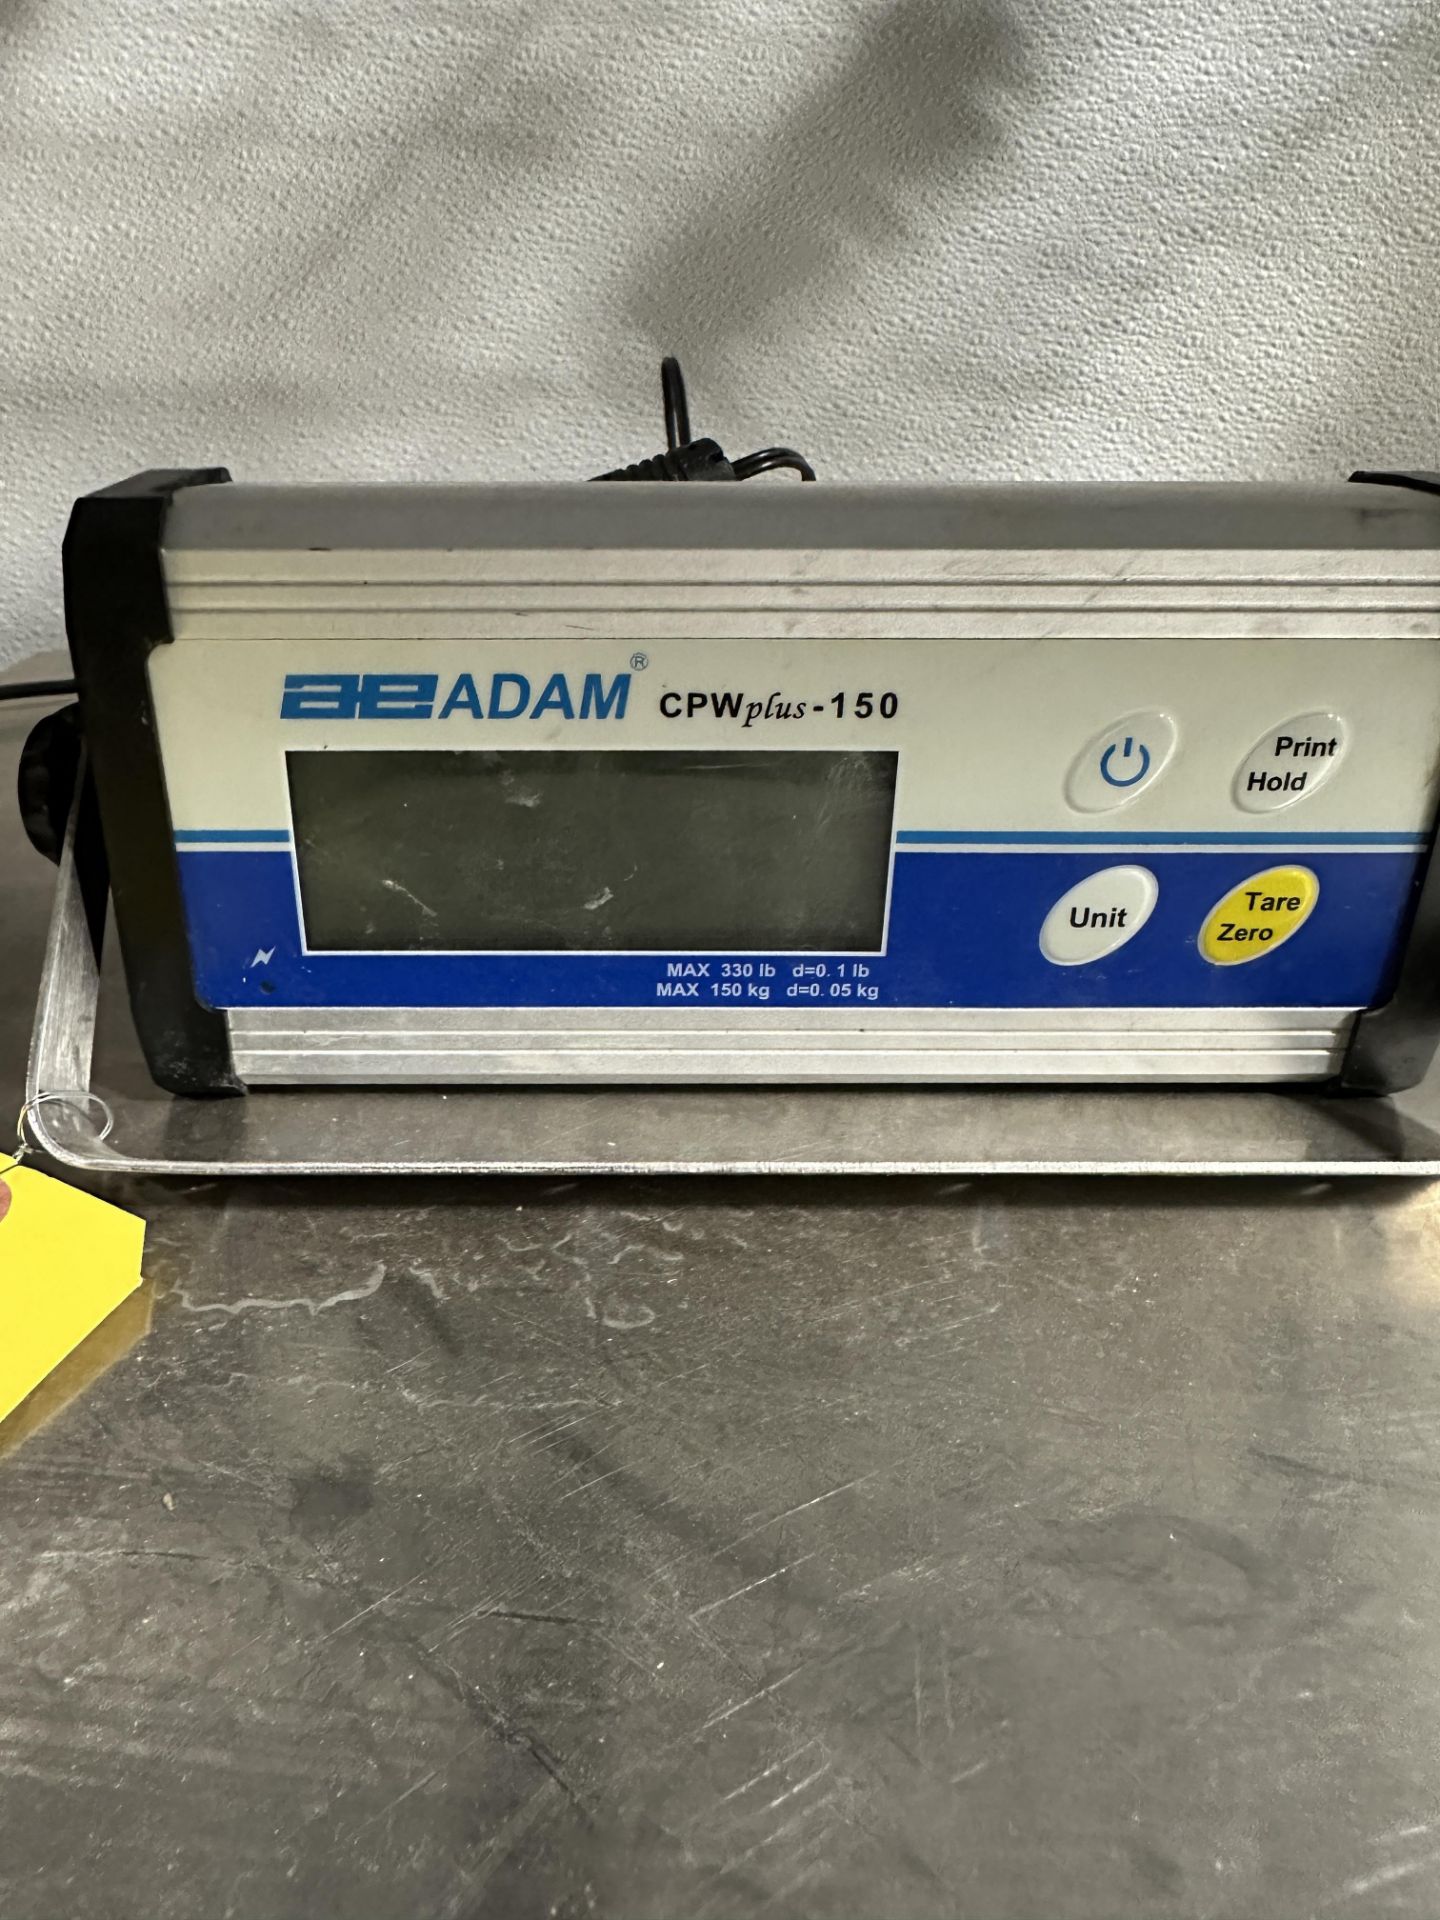 Adam Equipment Cpw Plus Scale 330 Lb. Capacity, 0.1 Lb. Resolution | Rig Fee $75 - Image 2 of 2